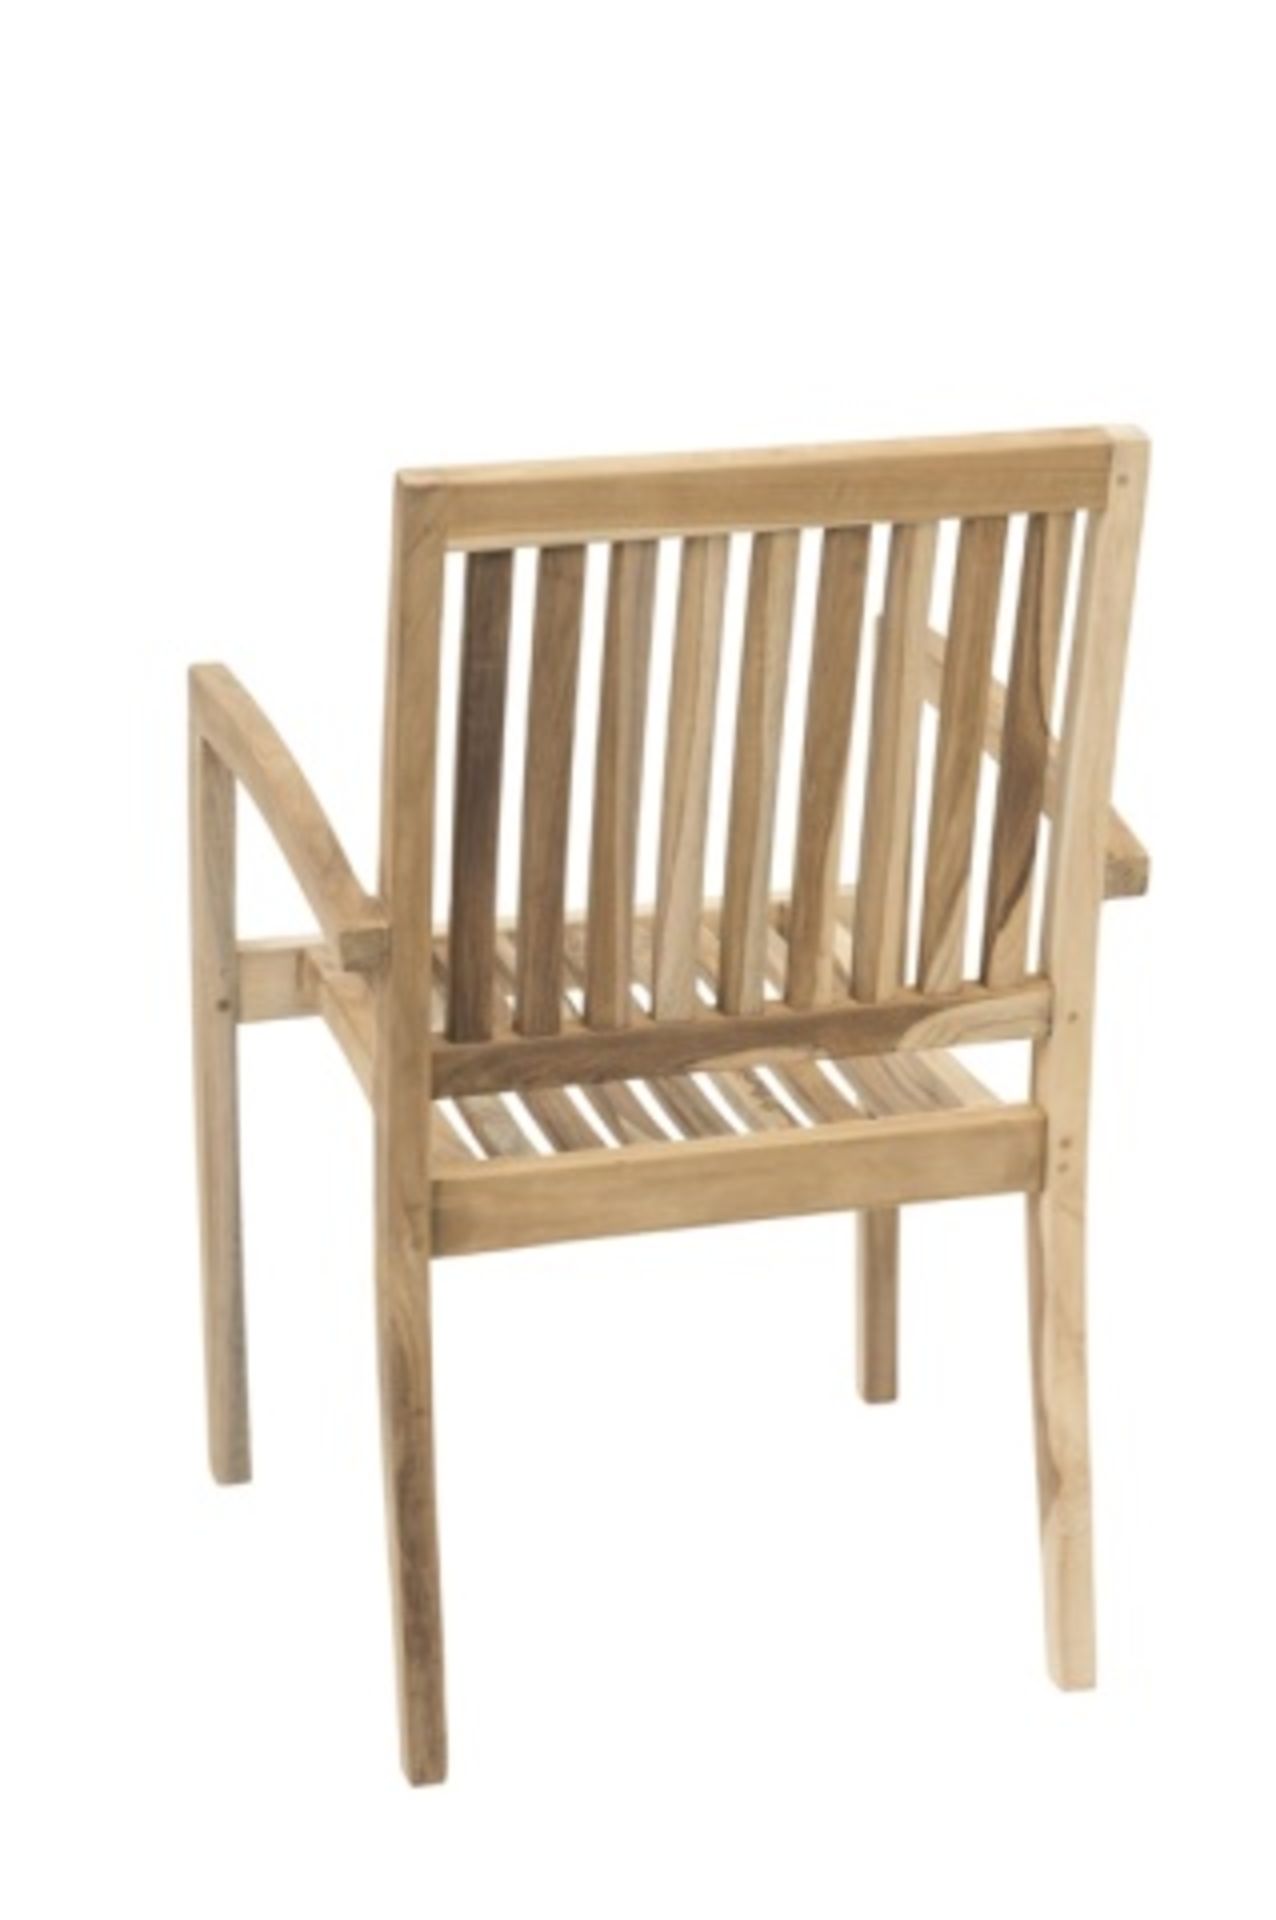 Genuine Teak Wood Reno Stacking Arm Chair. Natural Teak. Dimensions:22"w x 22.4"d x 35.8"h, 17.3"sh, - Image 2 of 6